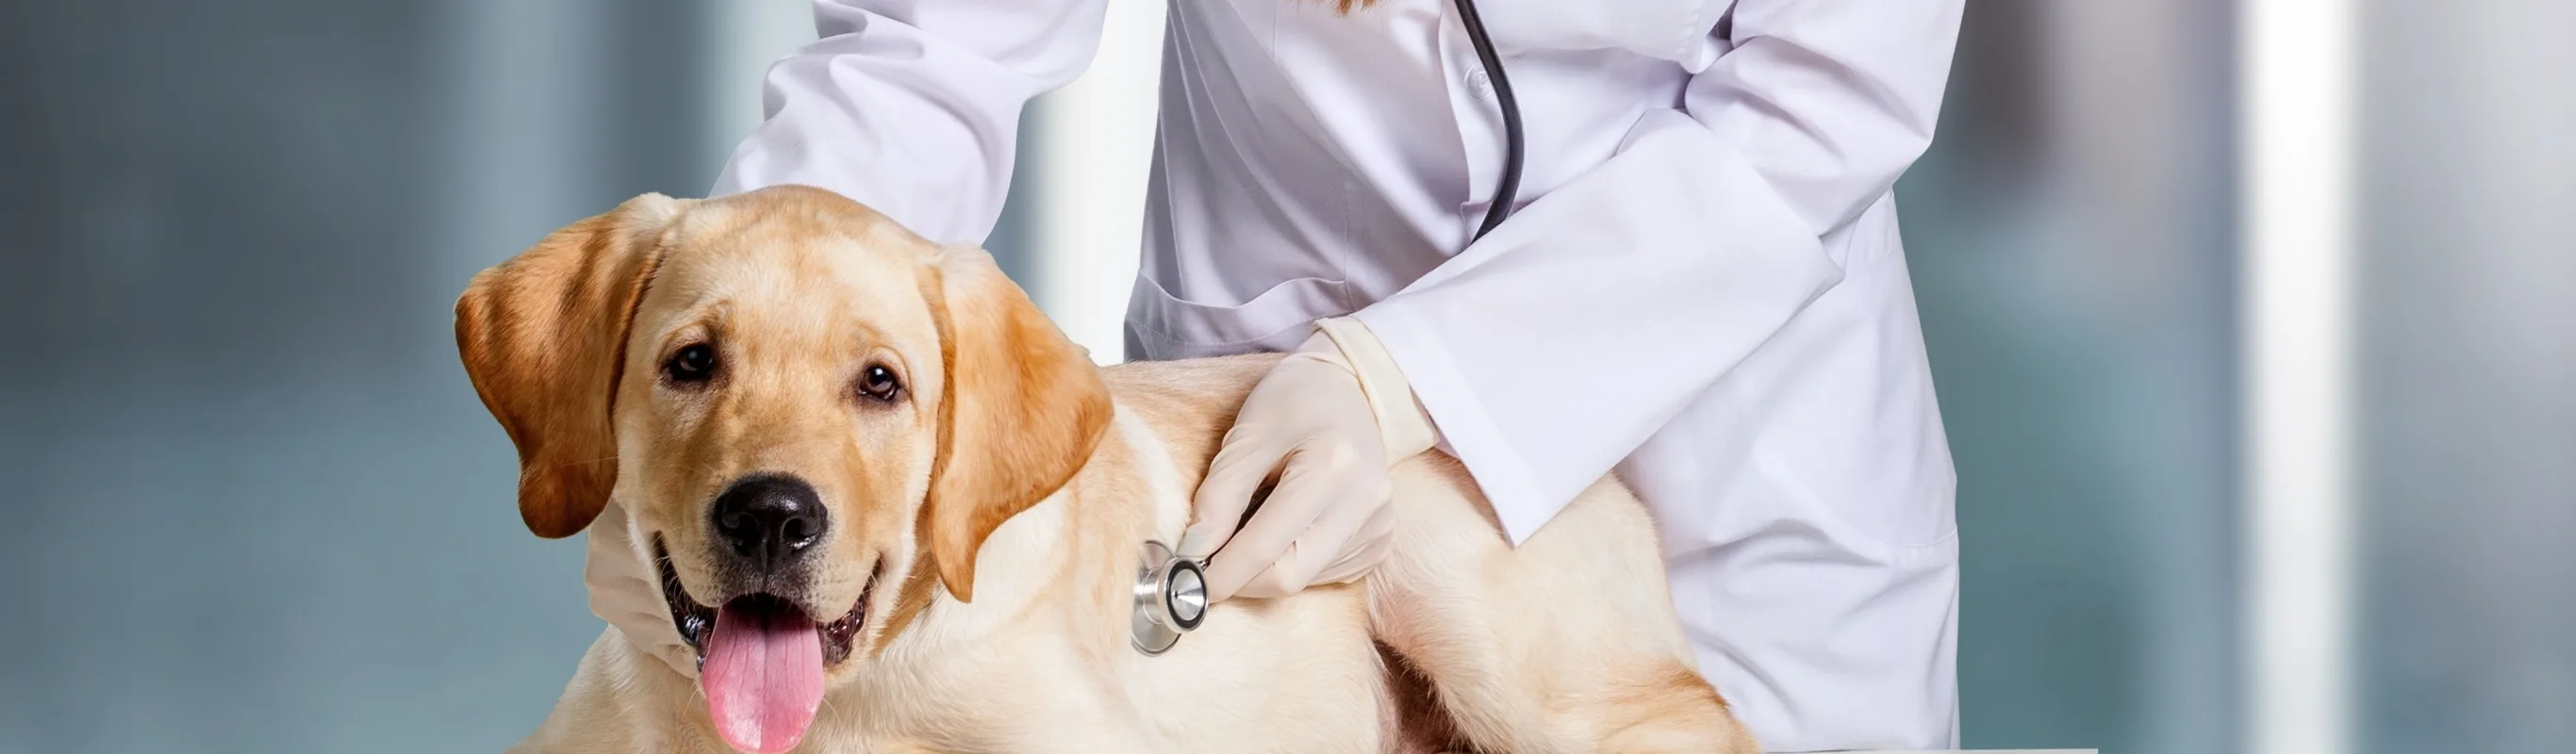 Doctor checking on dog.